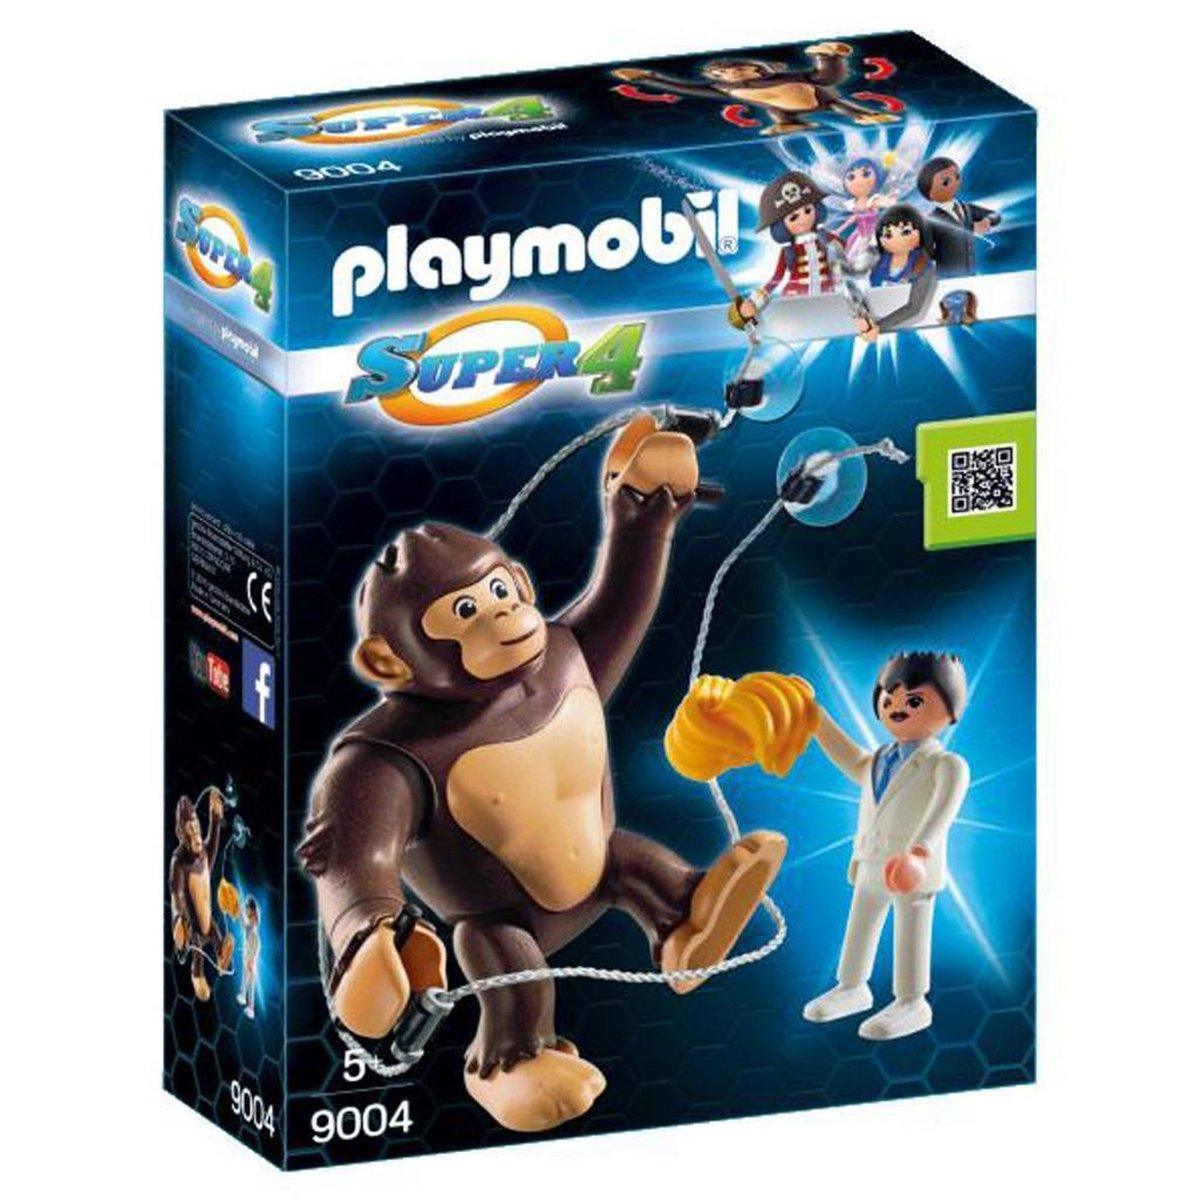 Playmobil Reuzenaap Gonk 9004 Super 4 PLAYMOBIL @ 2TTOYS PLAYMOBIL €. 5.99